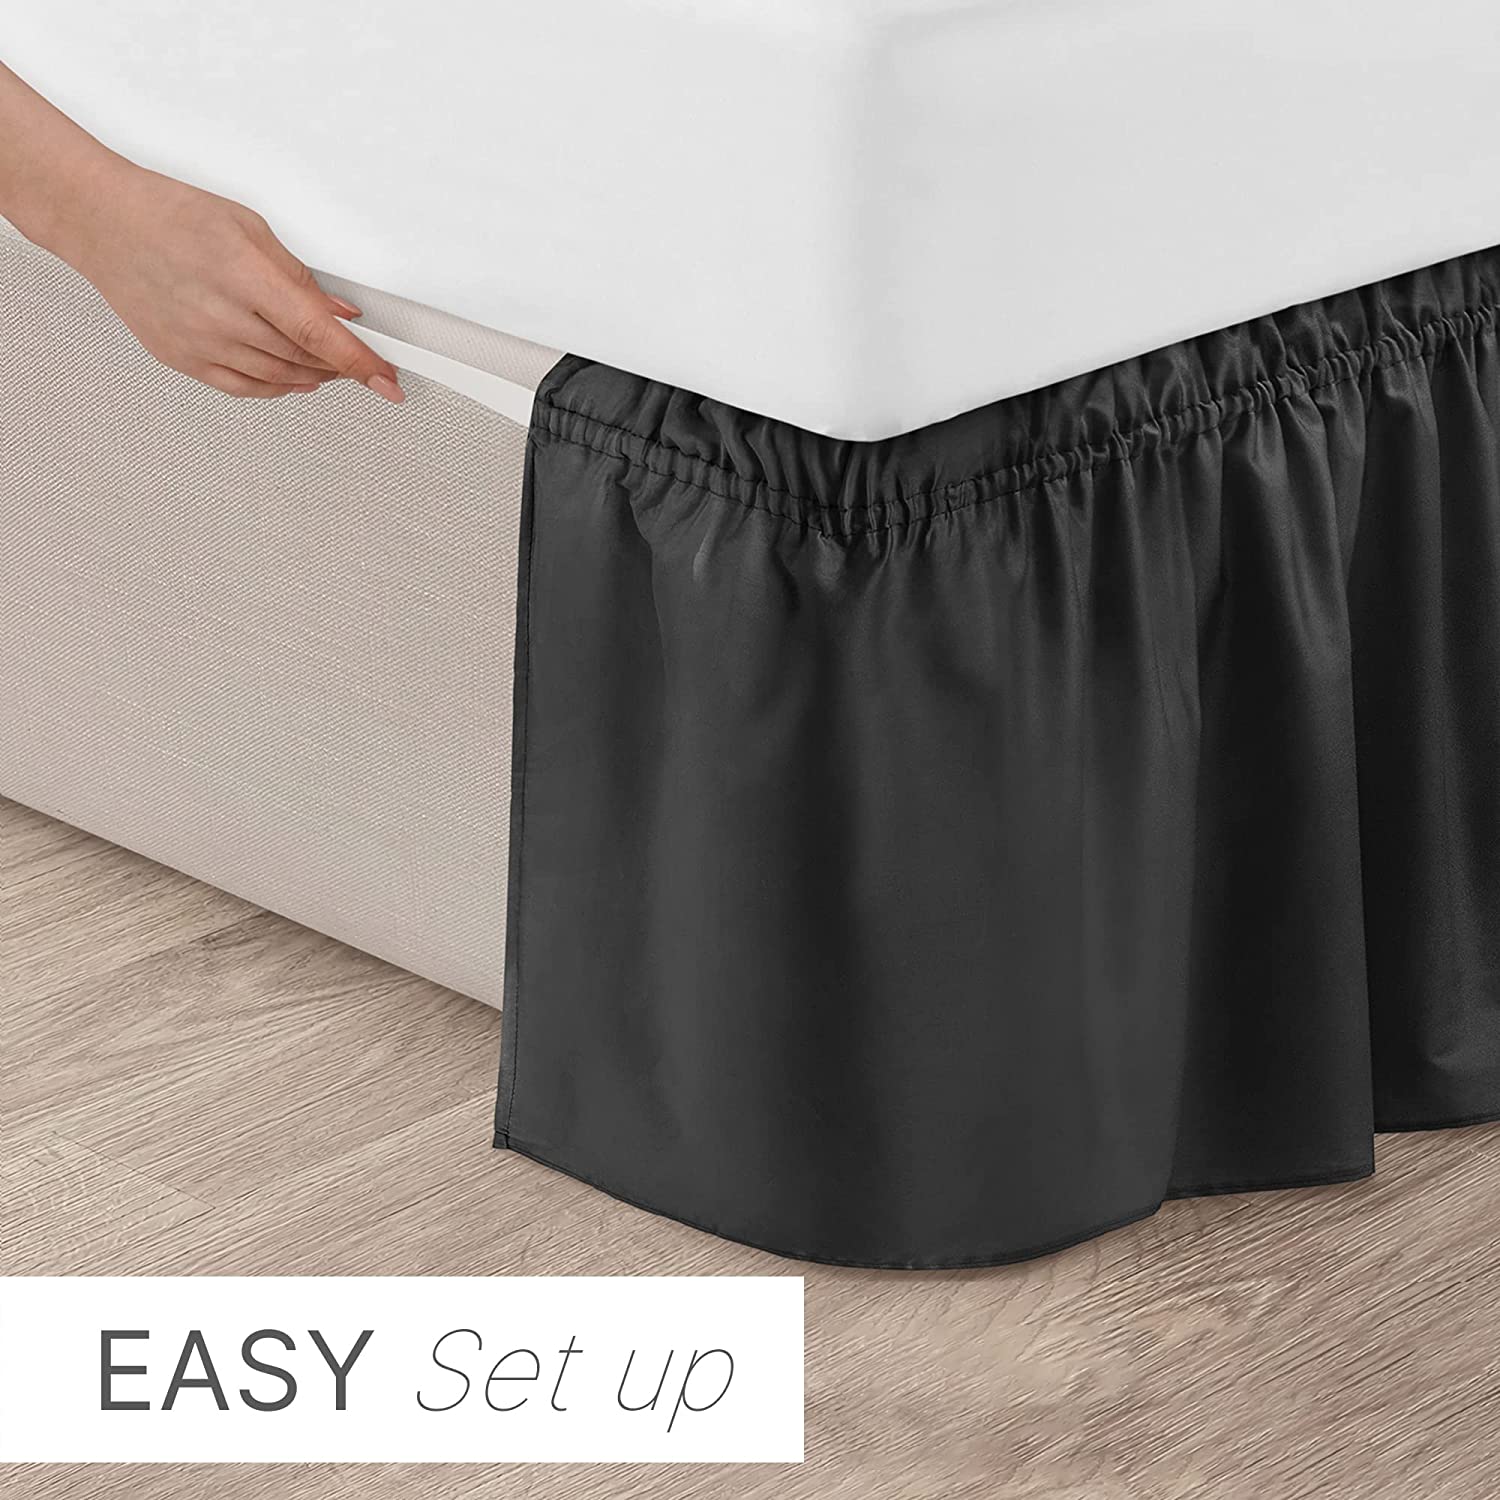 tes Ruffled Elastic Wrap Around Bedskirt 12 Inch Drop - Black